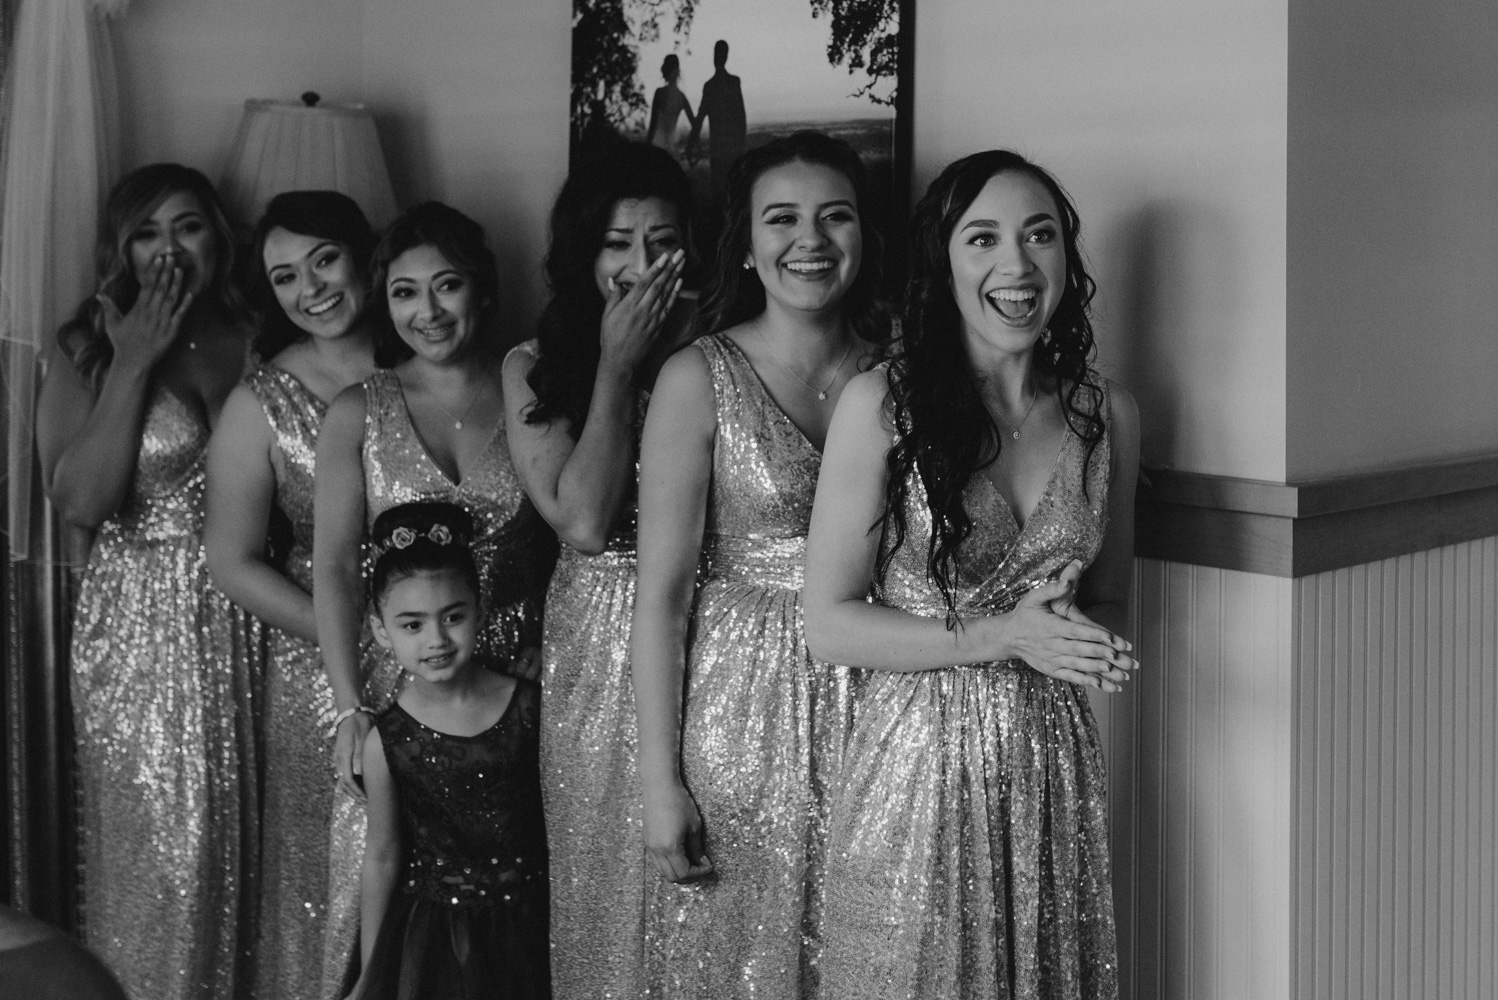 Rancho Victoria Vineyards wedding bridesmaids first look photo